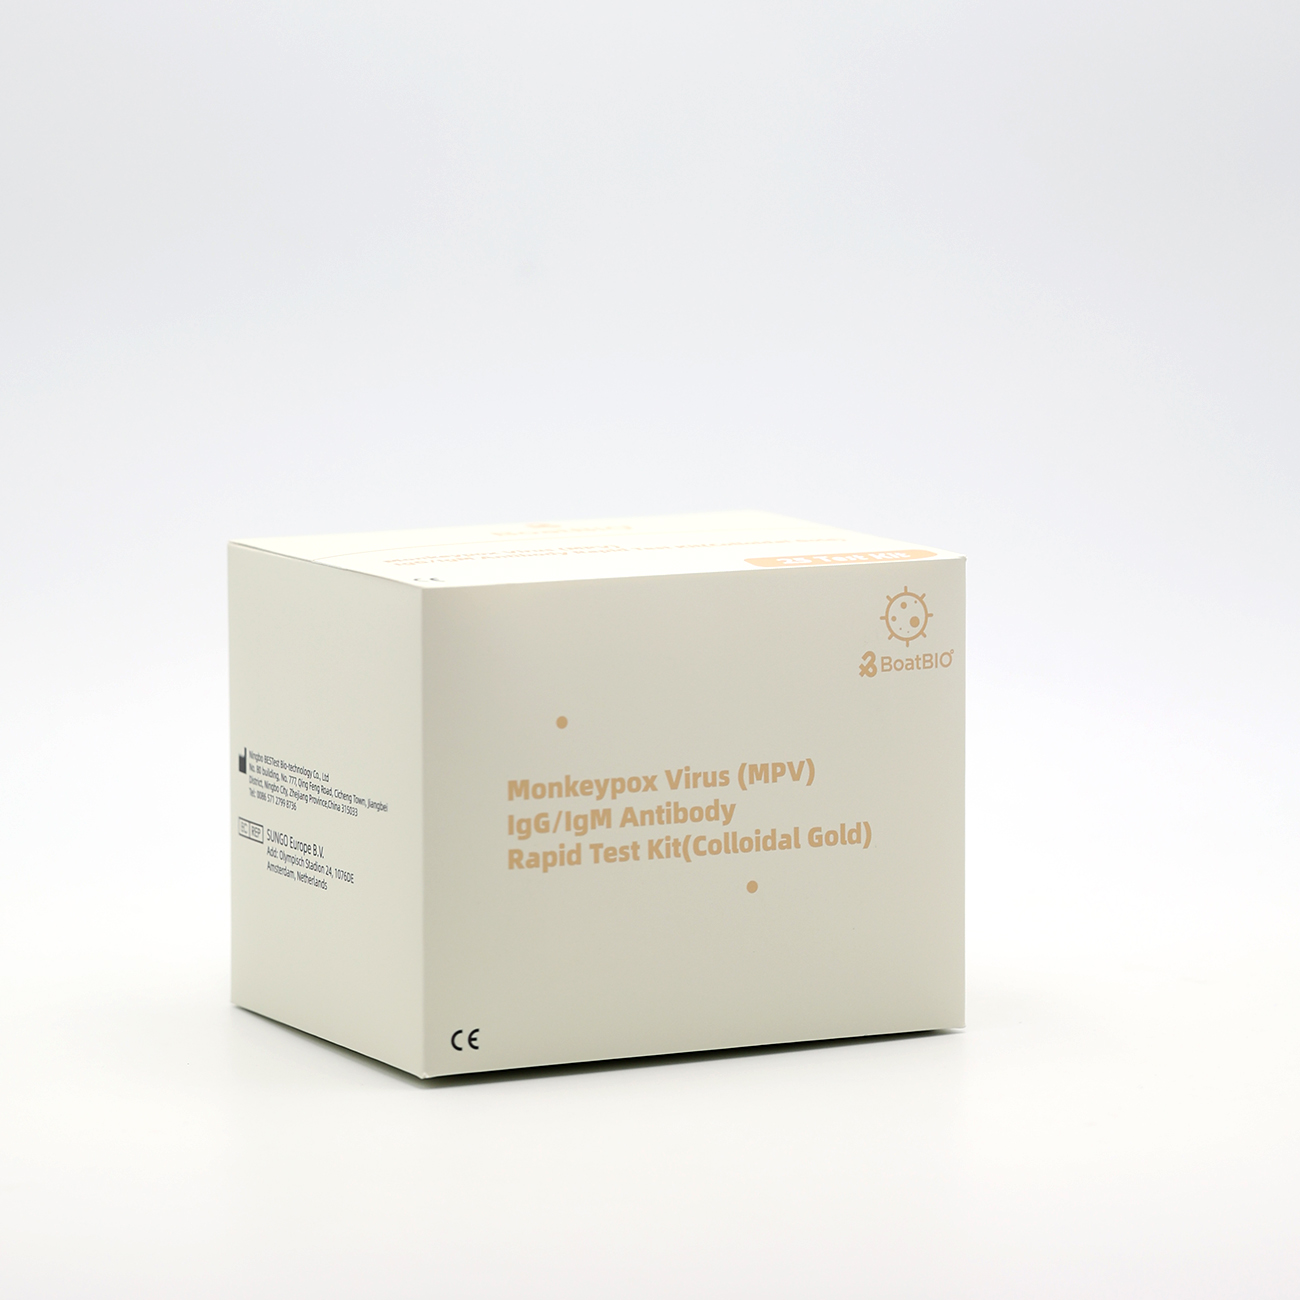 Monkeypox Virus (MPV) IgG/IgM Antibody Rapid Test Kit (Colloidal Gold)